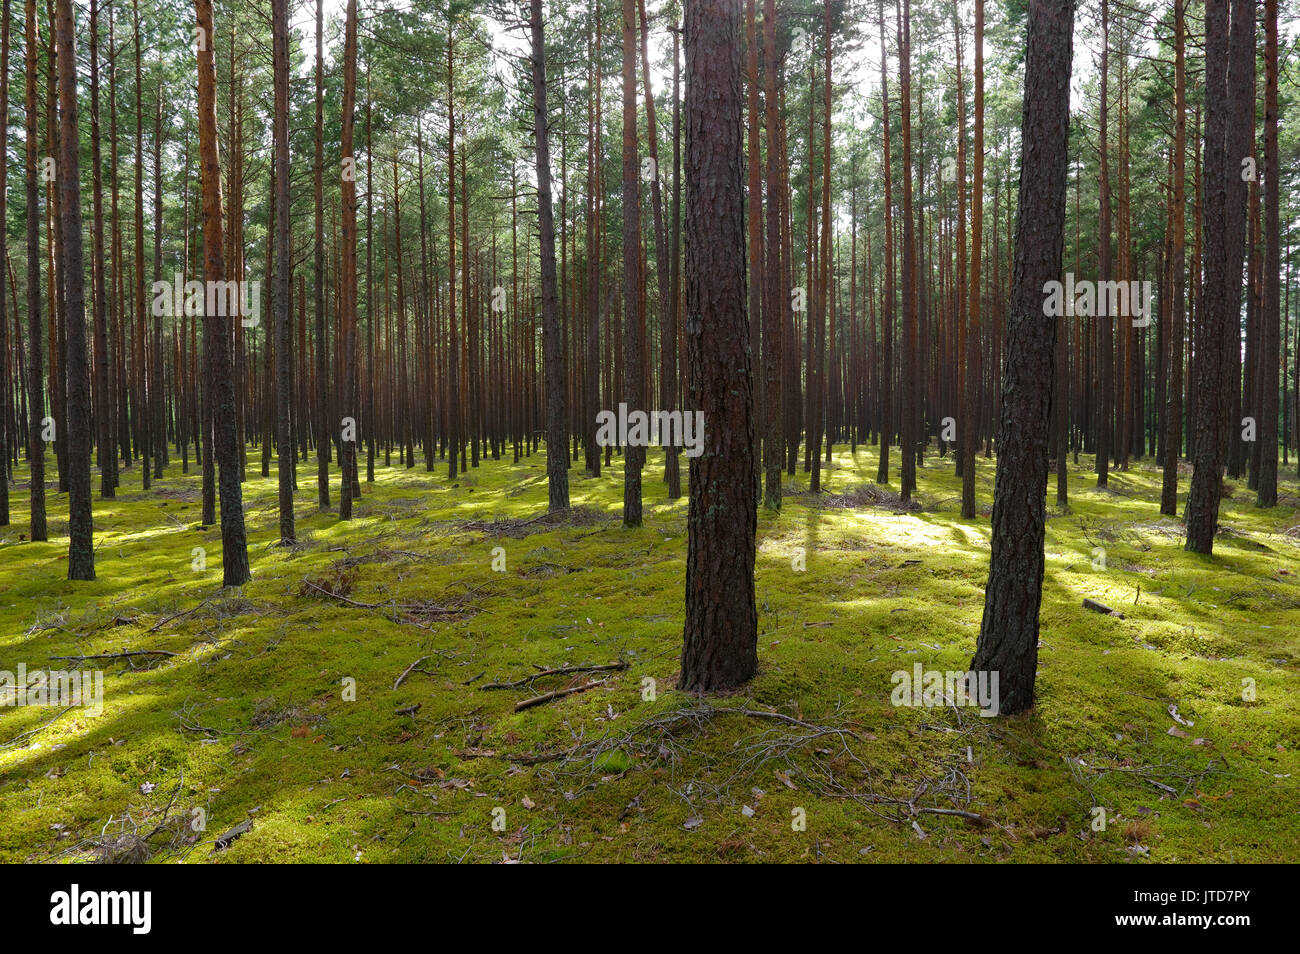 Kihnu Island Pine Forest. Estonia. 5th August 2017 Stock Photo